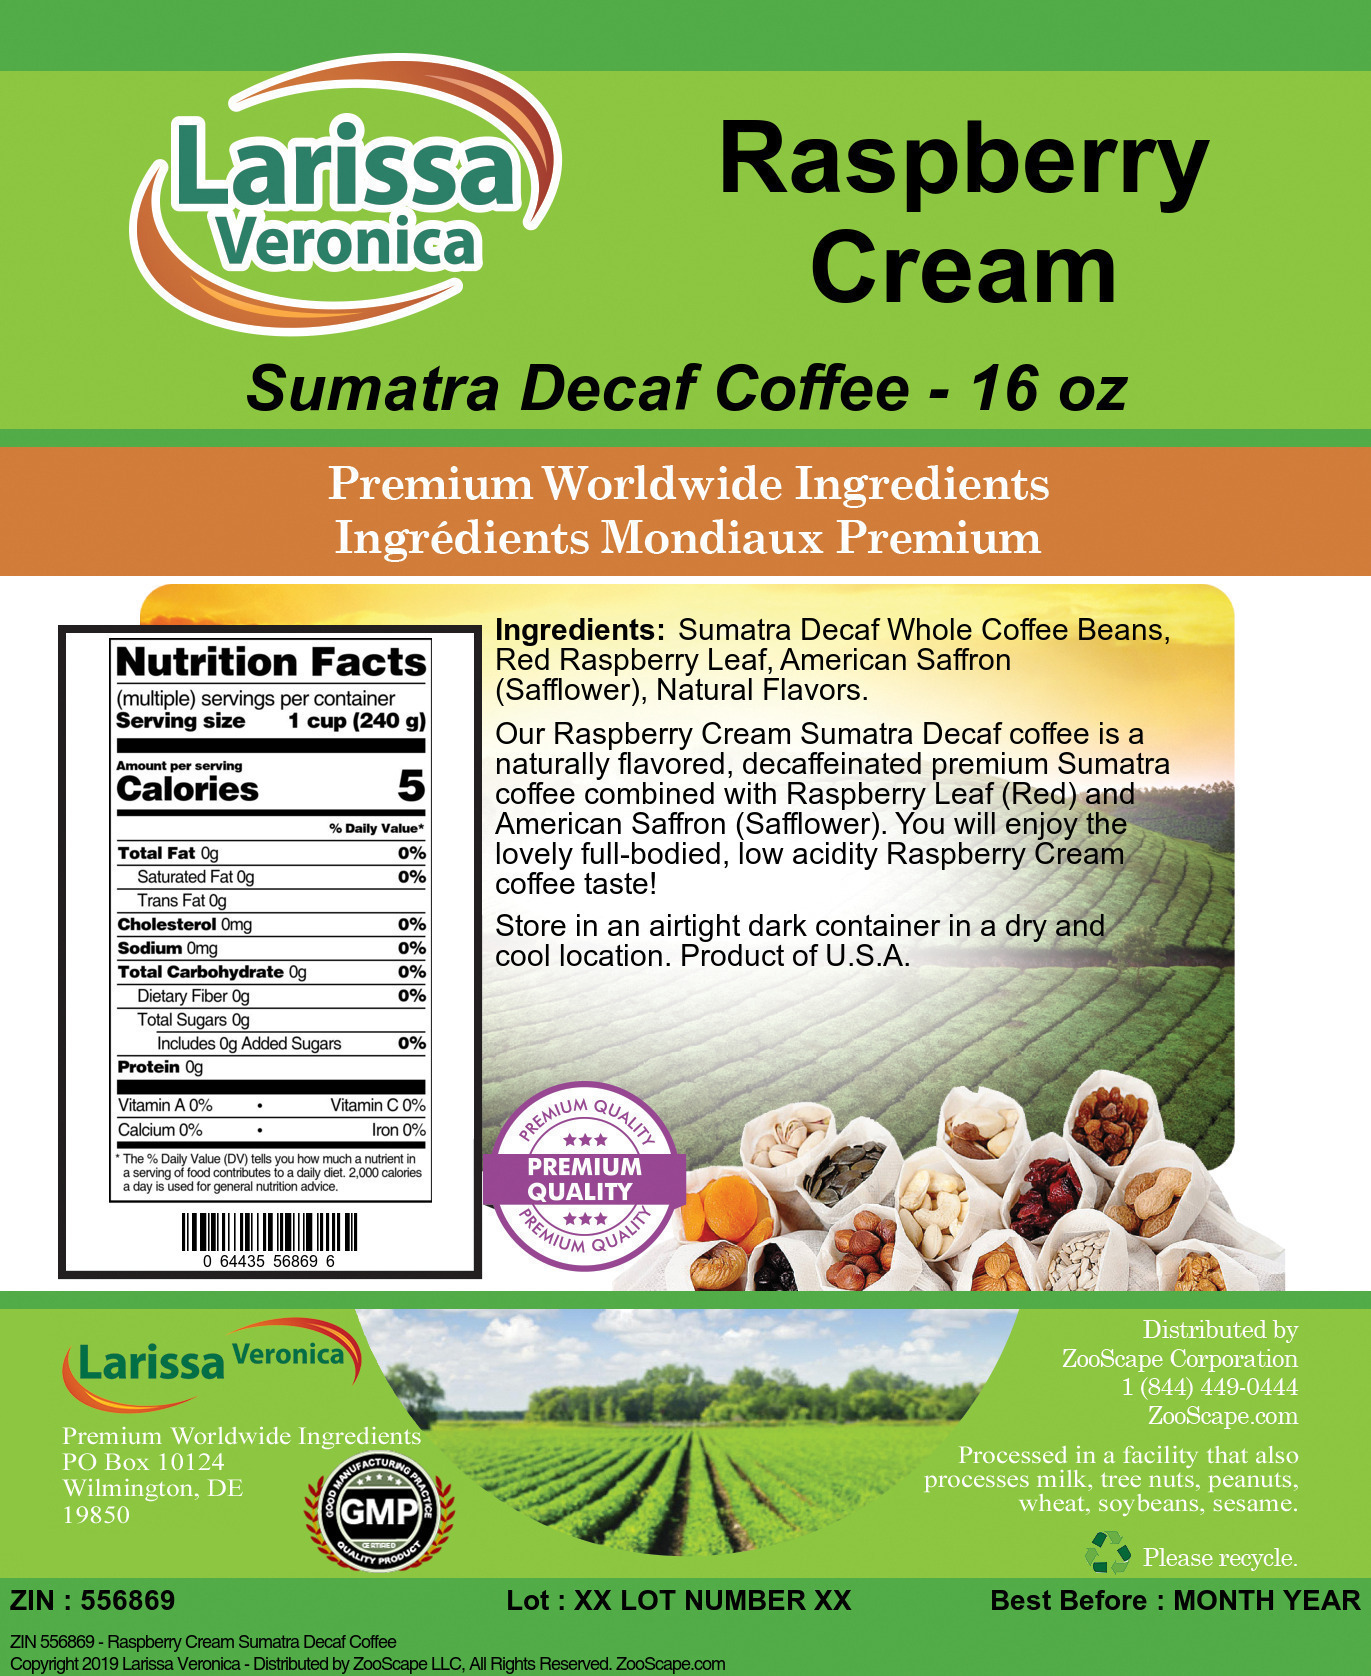 Raspberry Cream Sumatra Decaf Coffee - Label